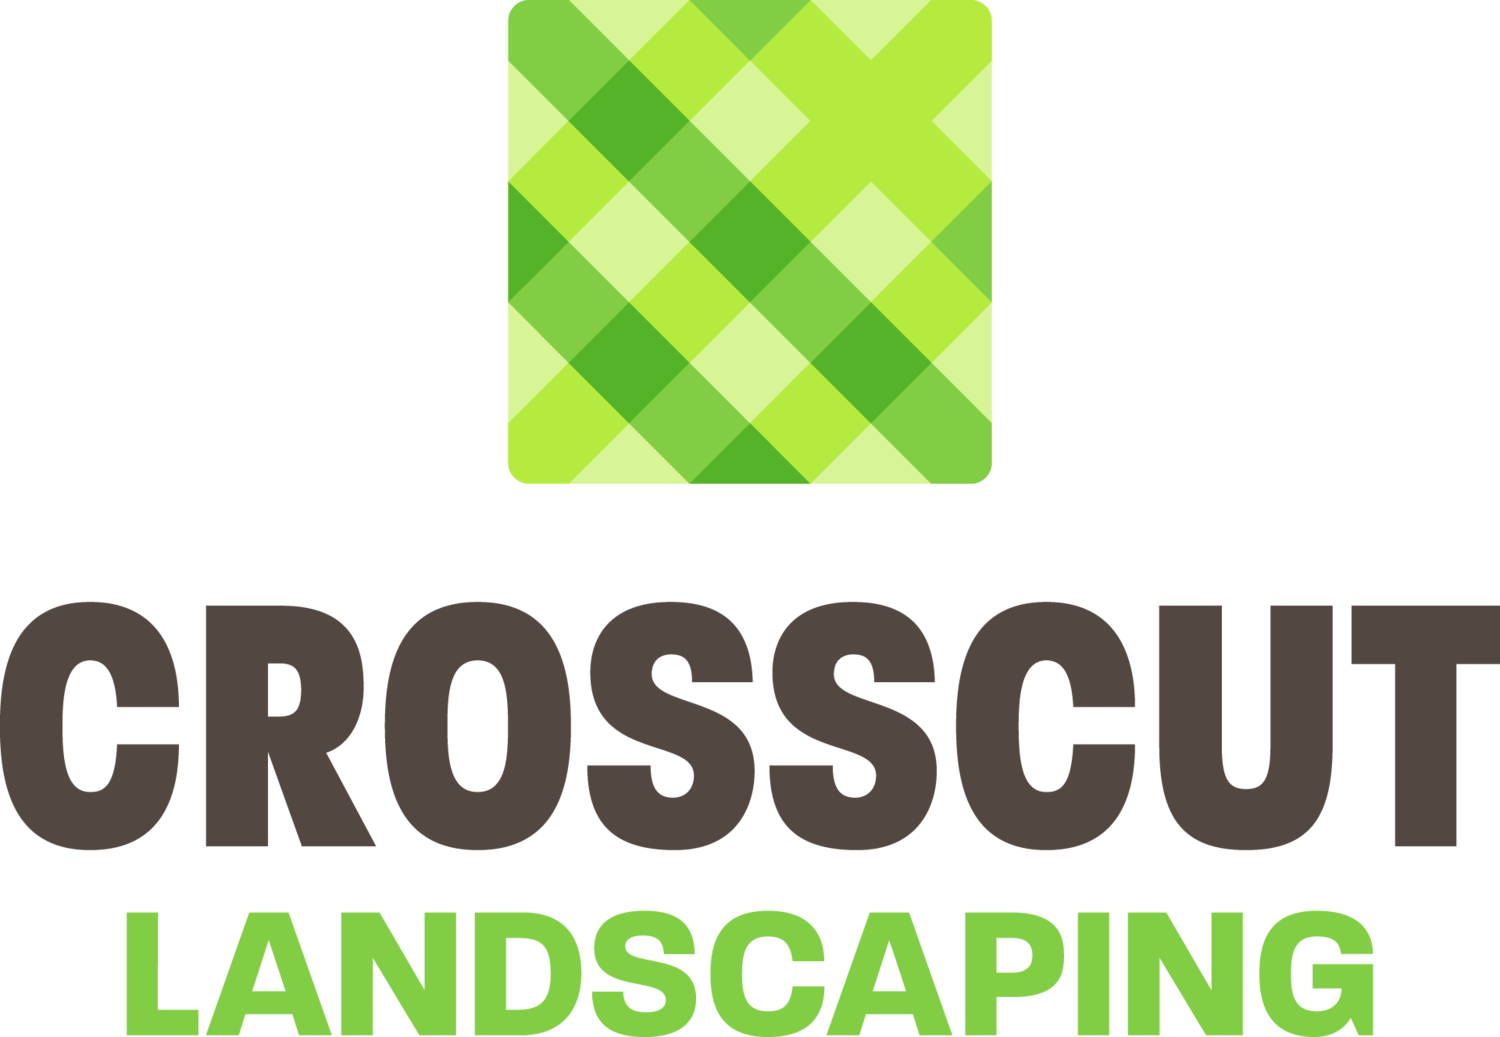 Crosscut Landscaping